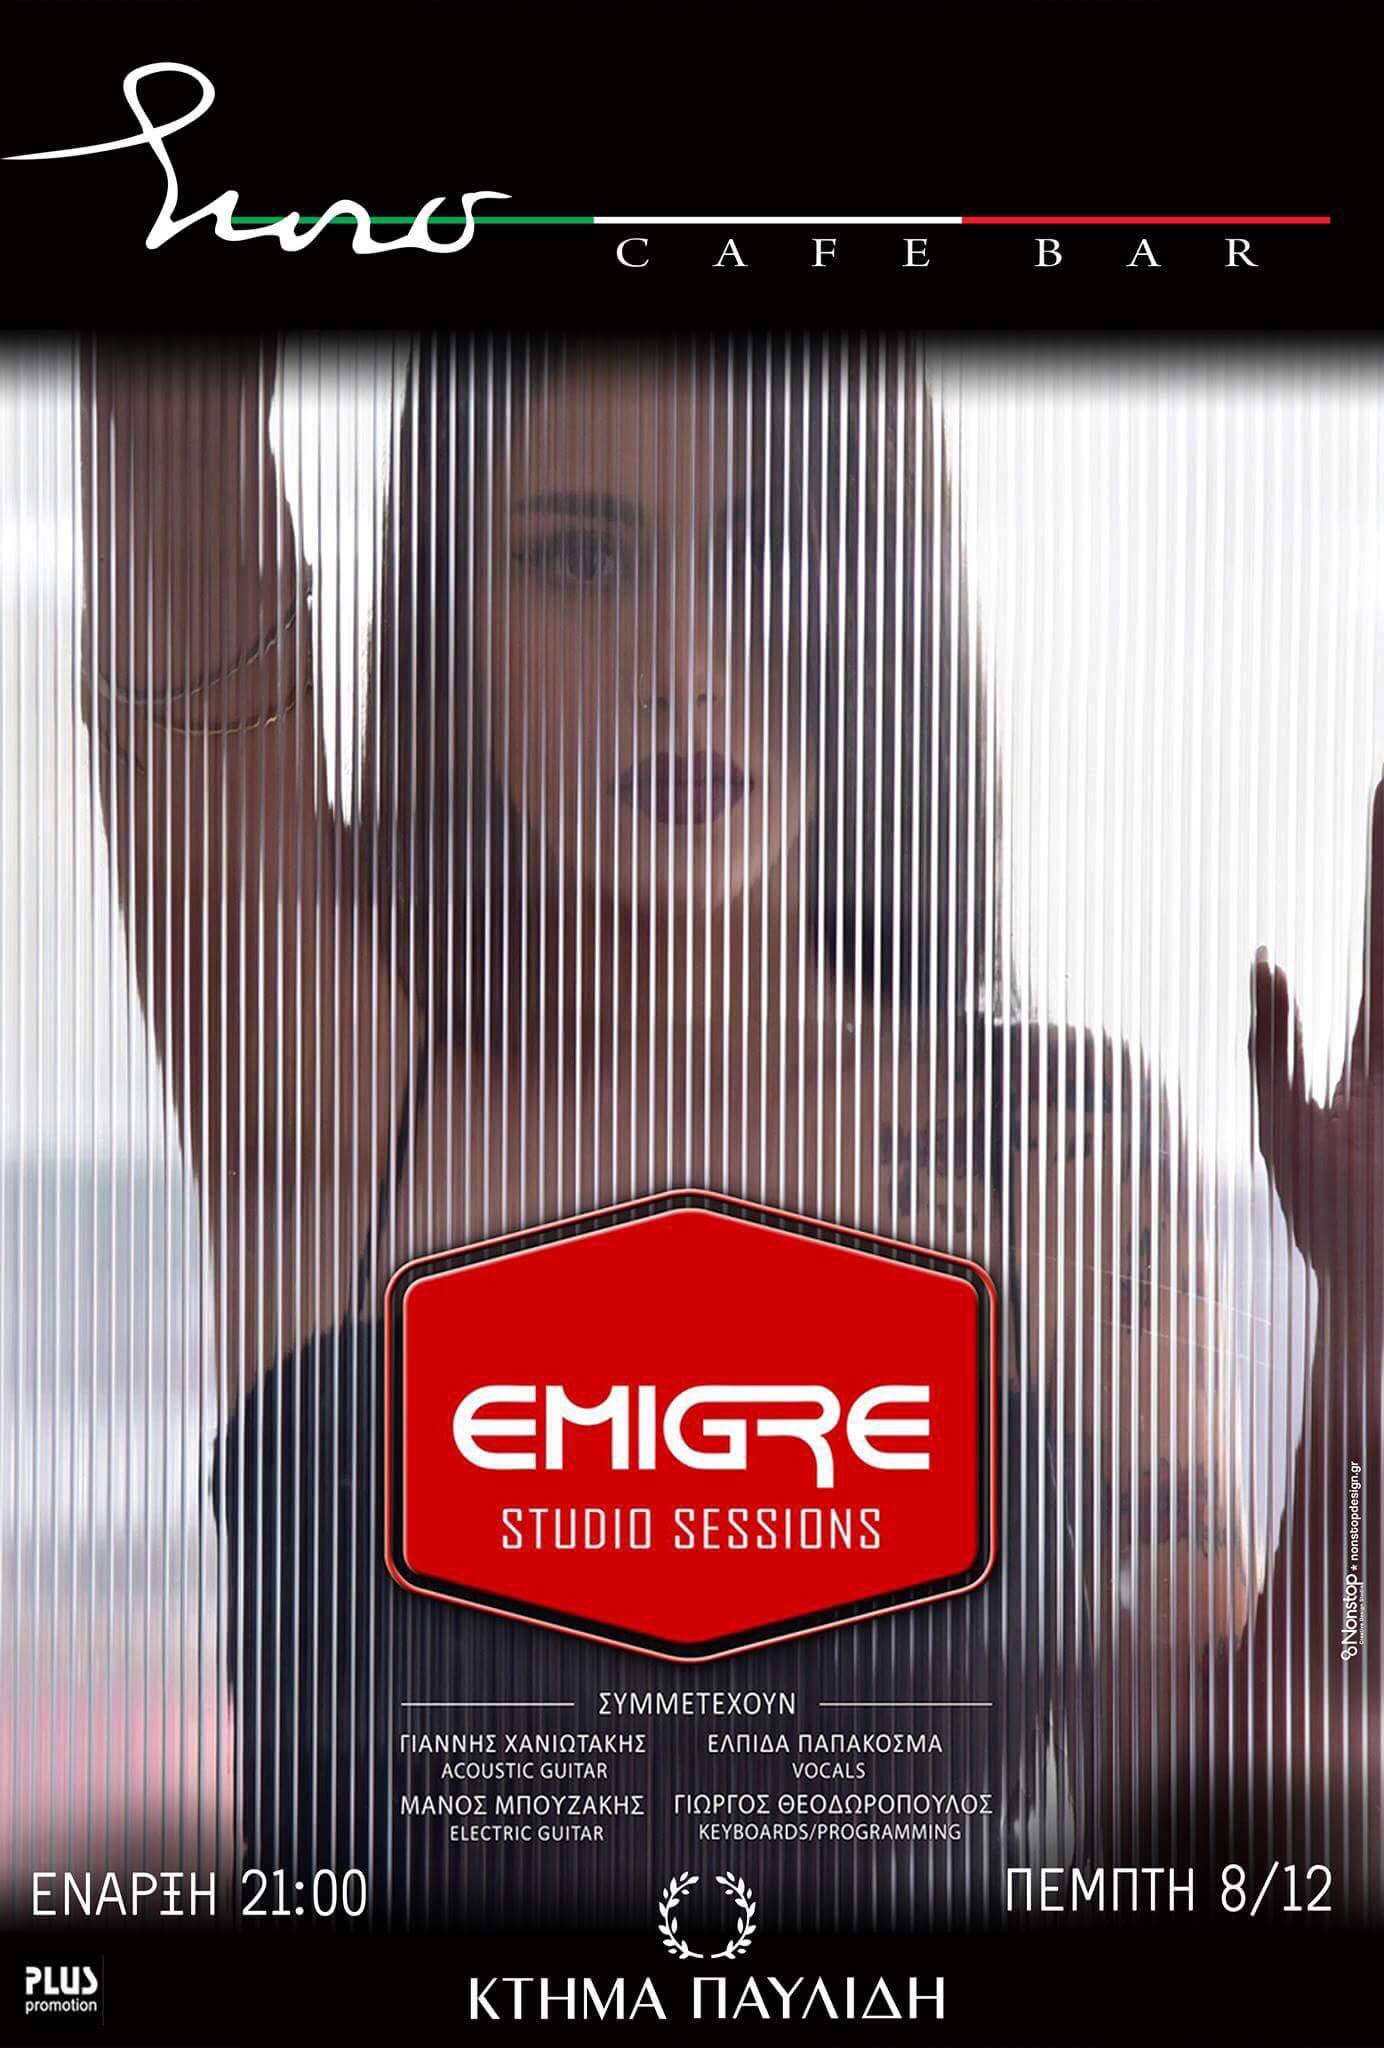 emigre-studio-sessions-enzo-bar-drama-poster